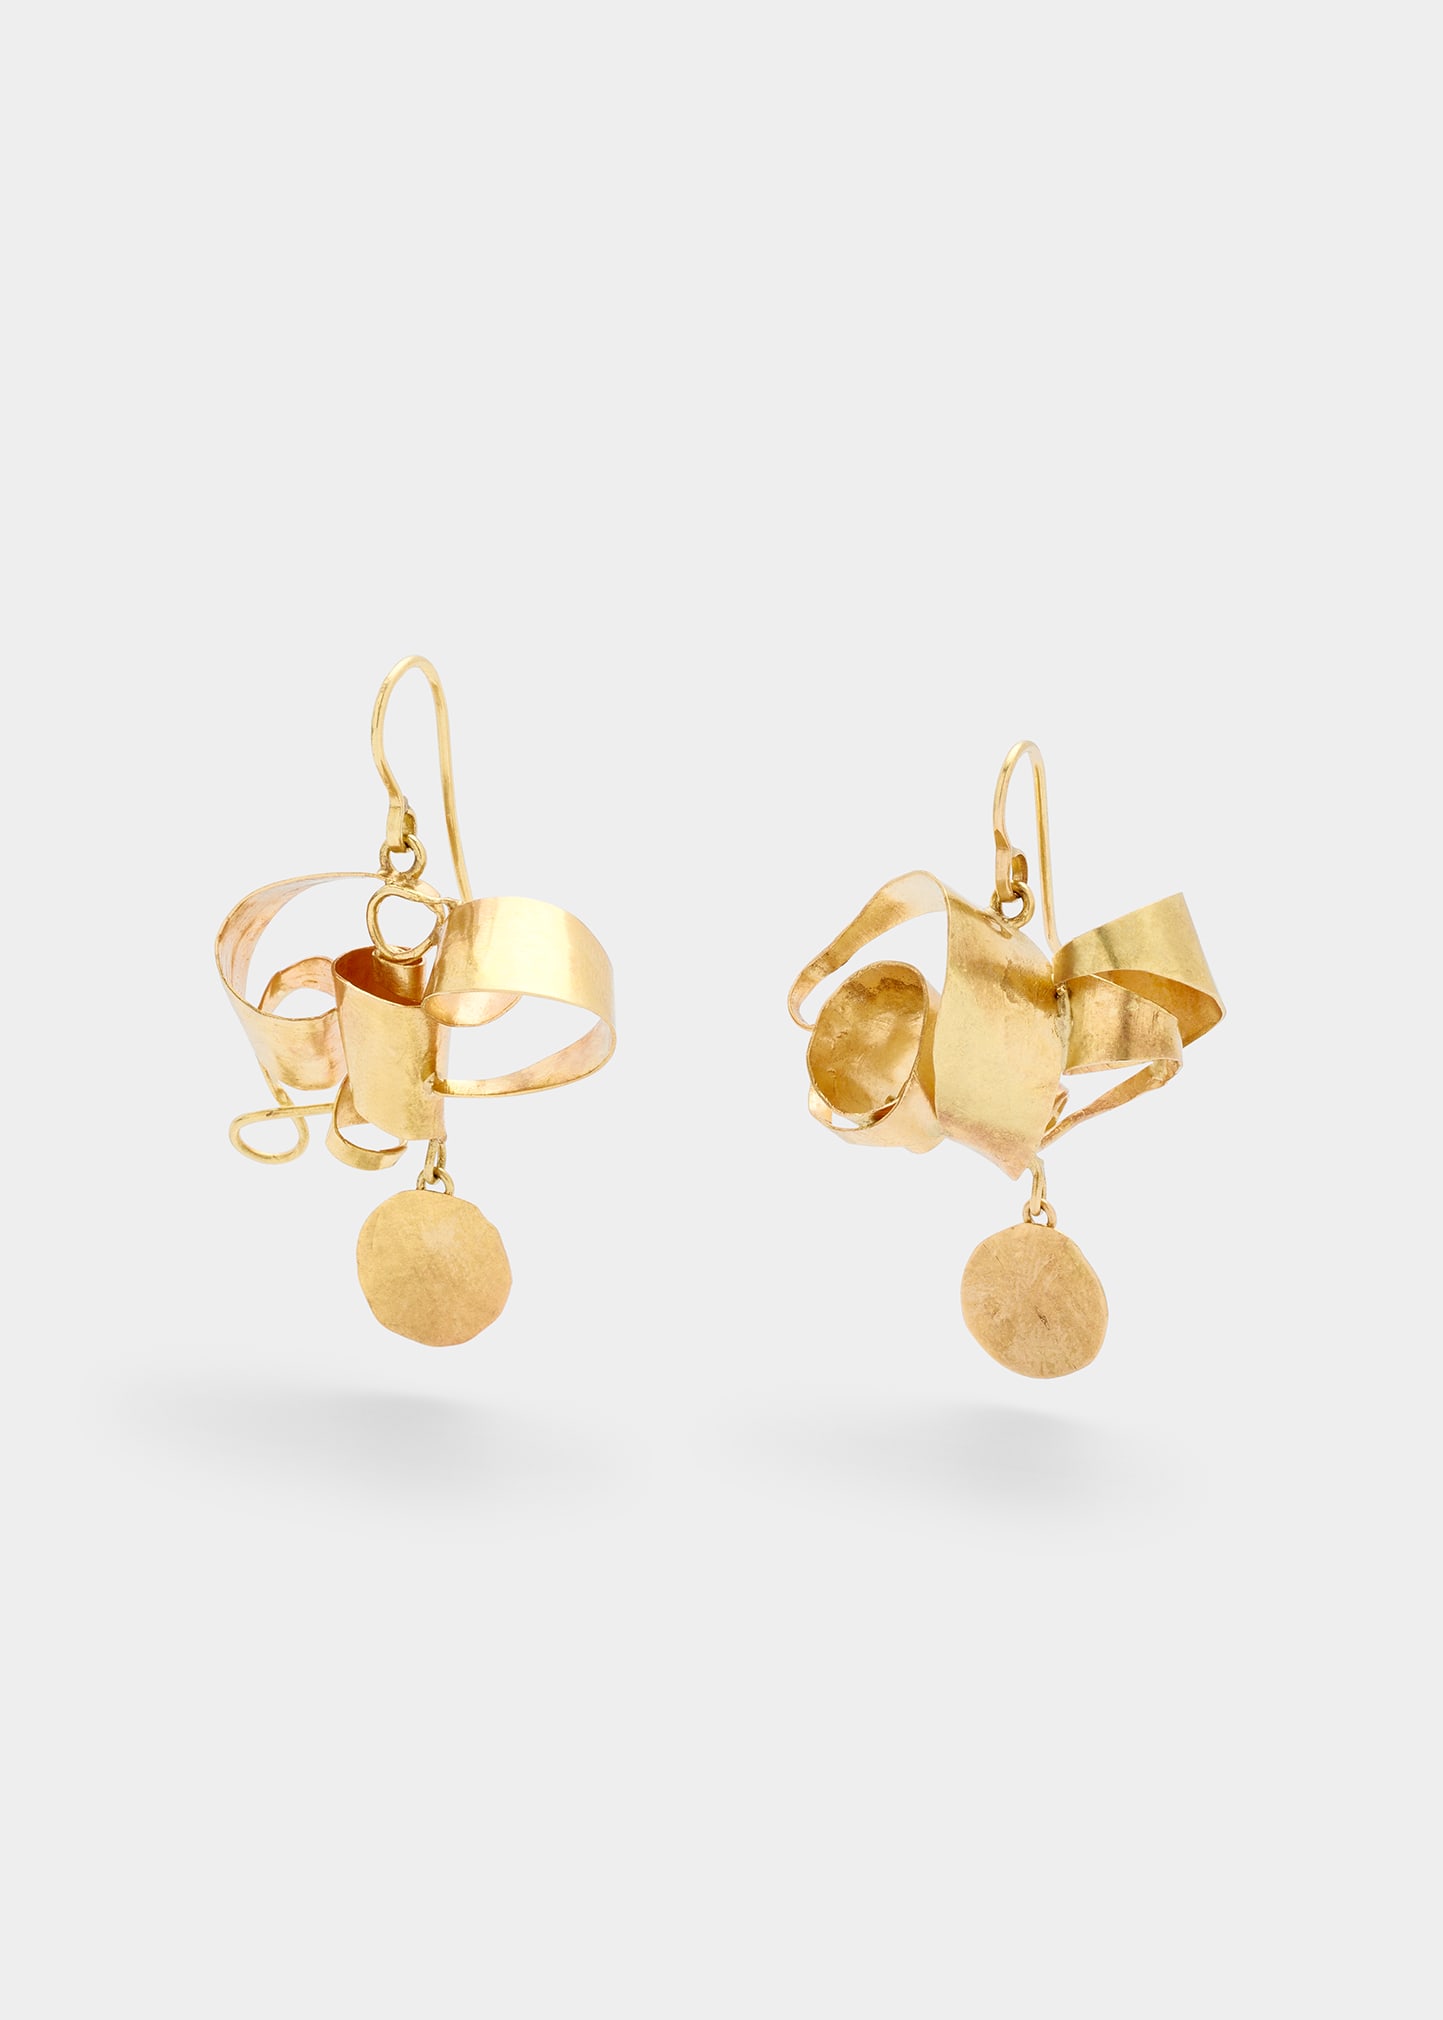 JUDY GEIB Wild Tangled Drop Earrings in 18K Gold